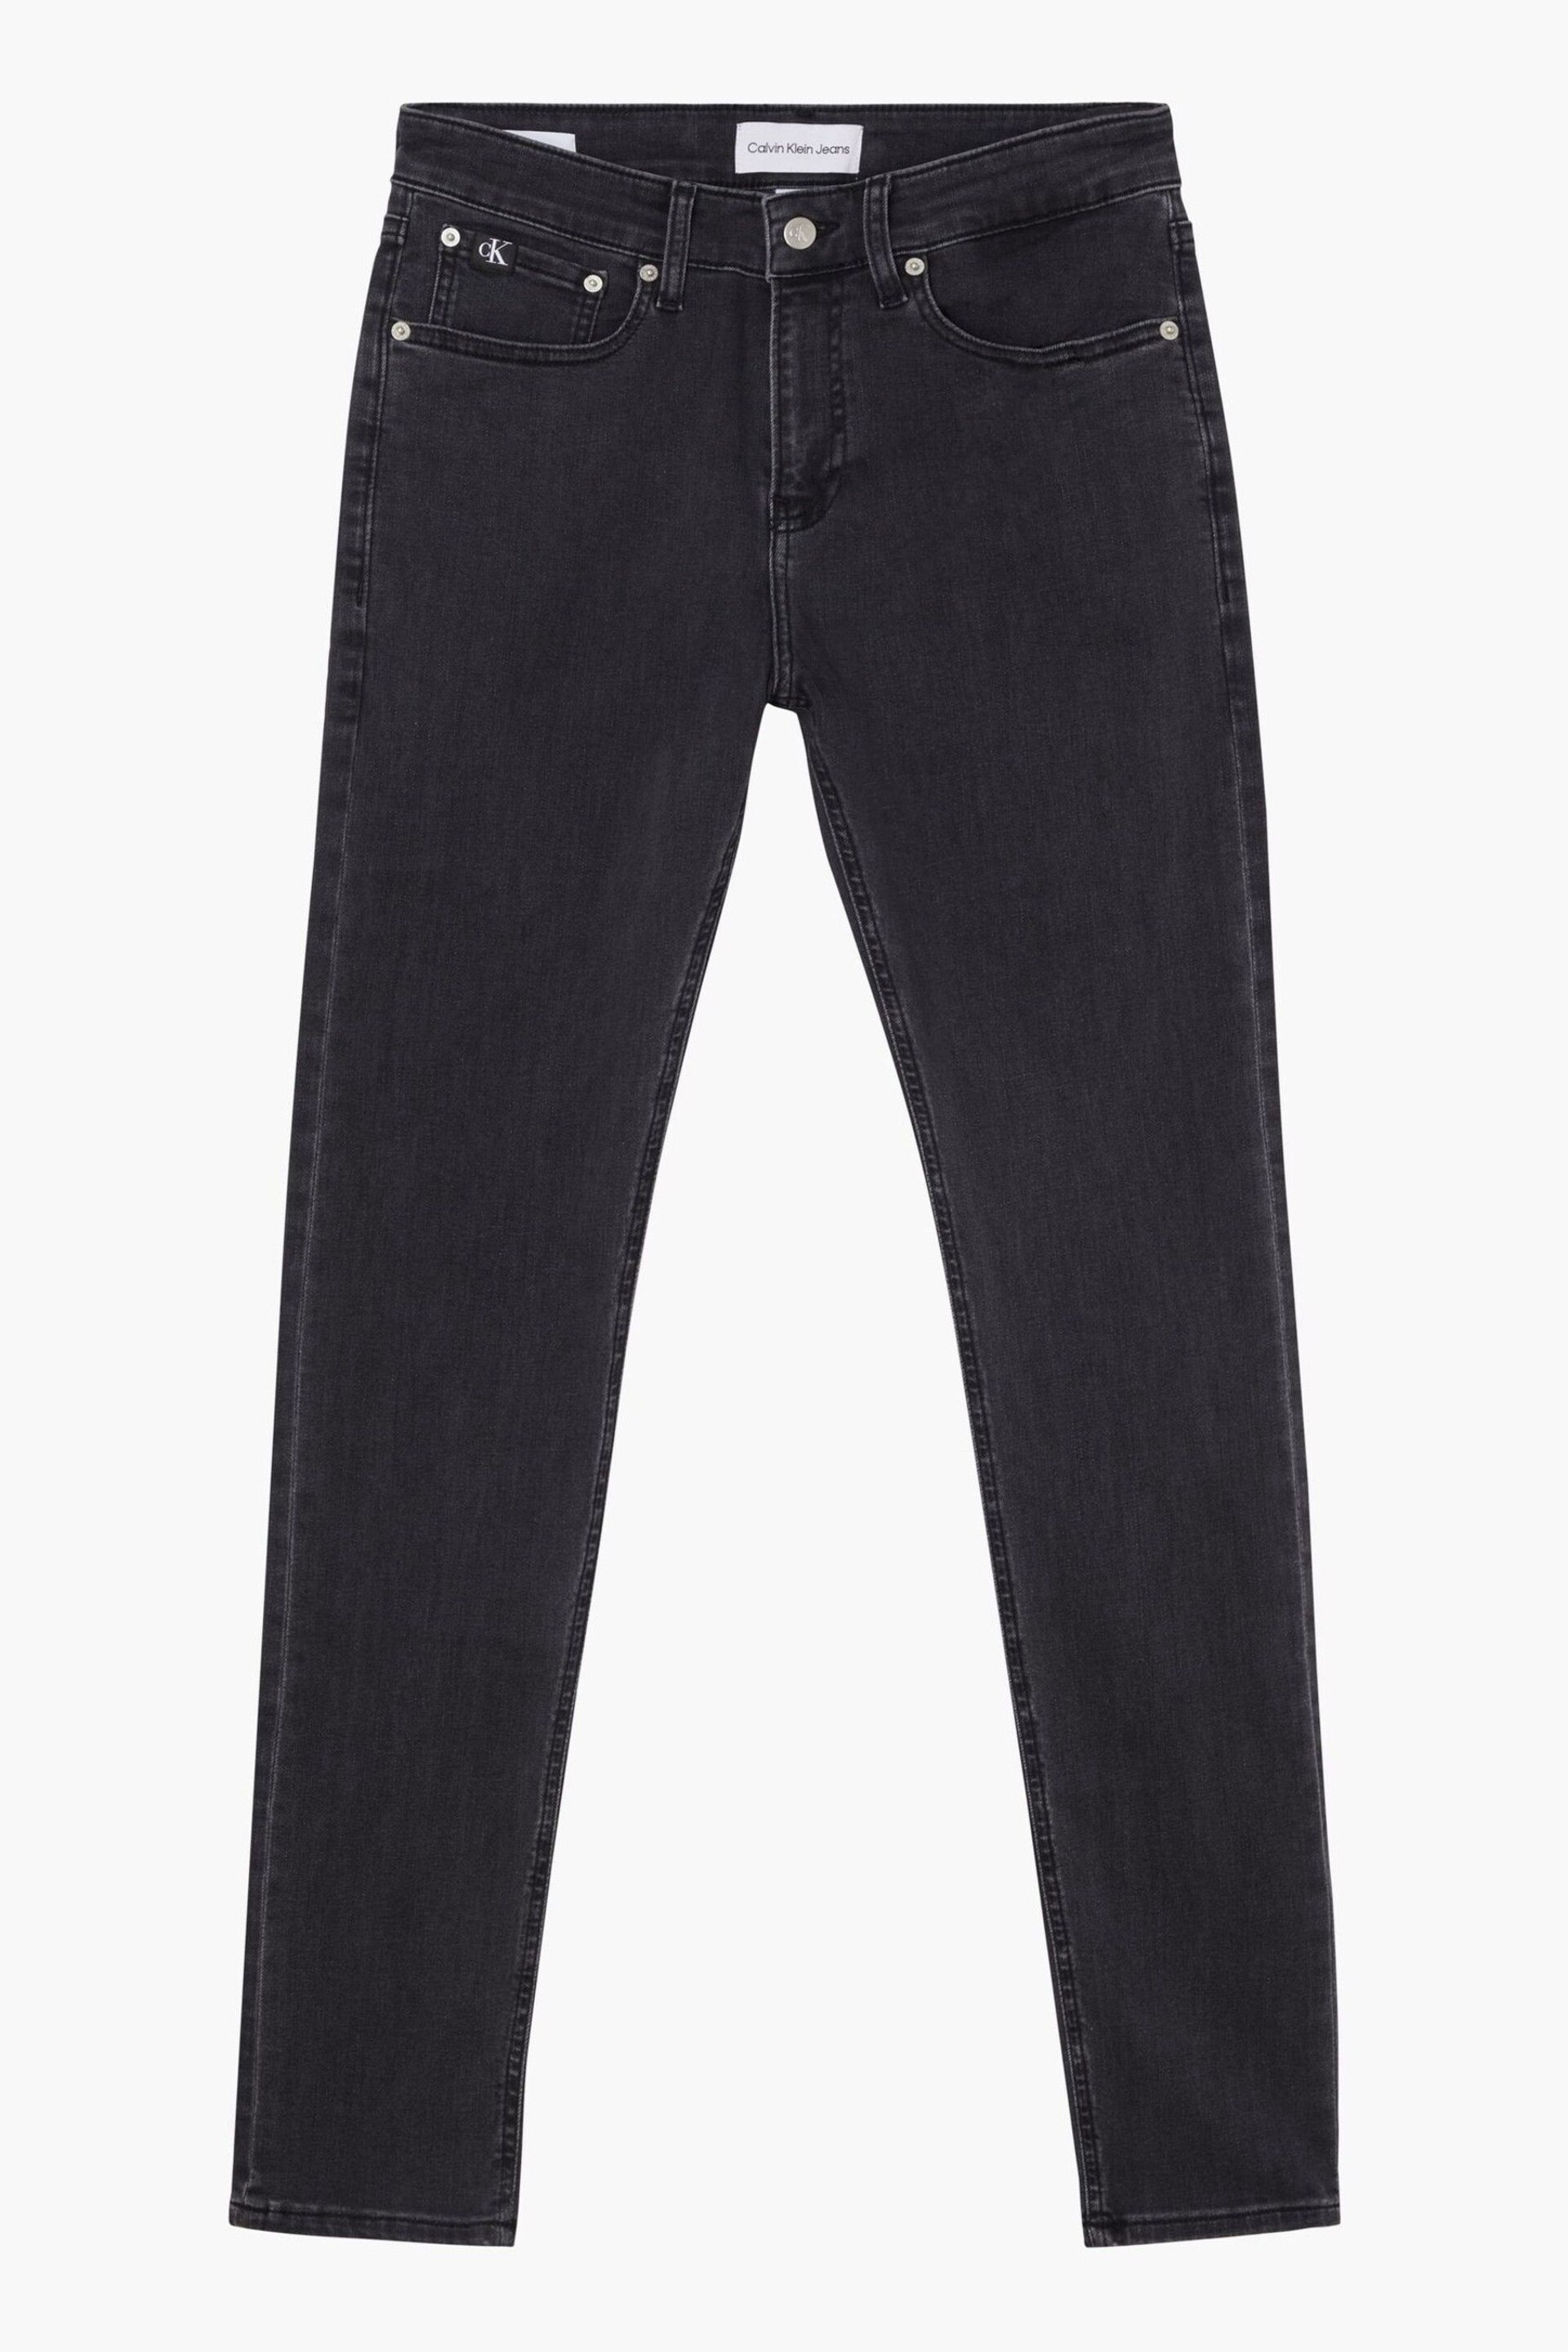 Calvin Klein Jeans Grey Skinny Jeans - Image 8 of 9